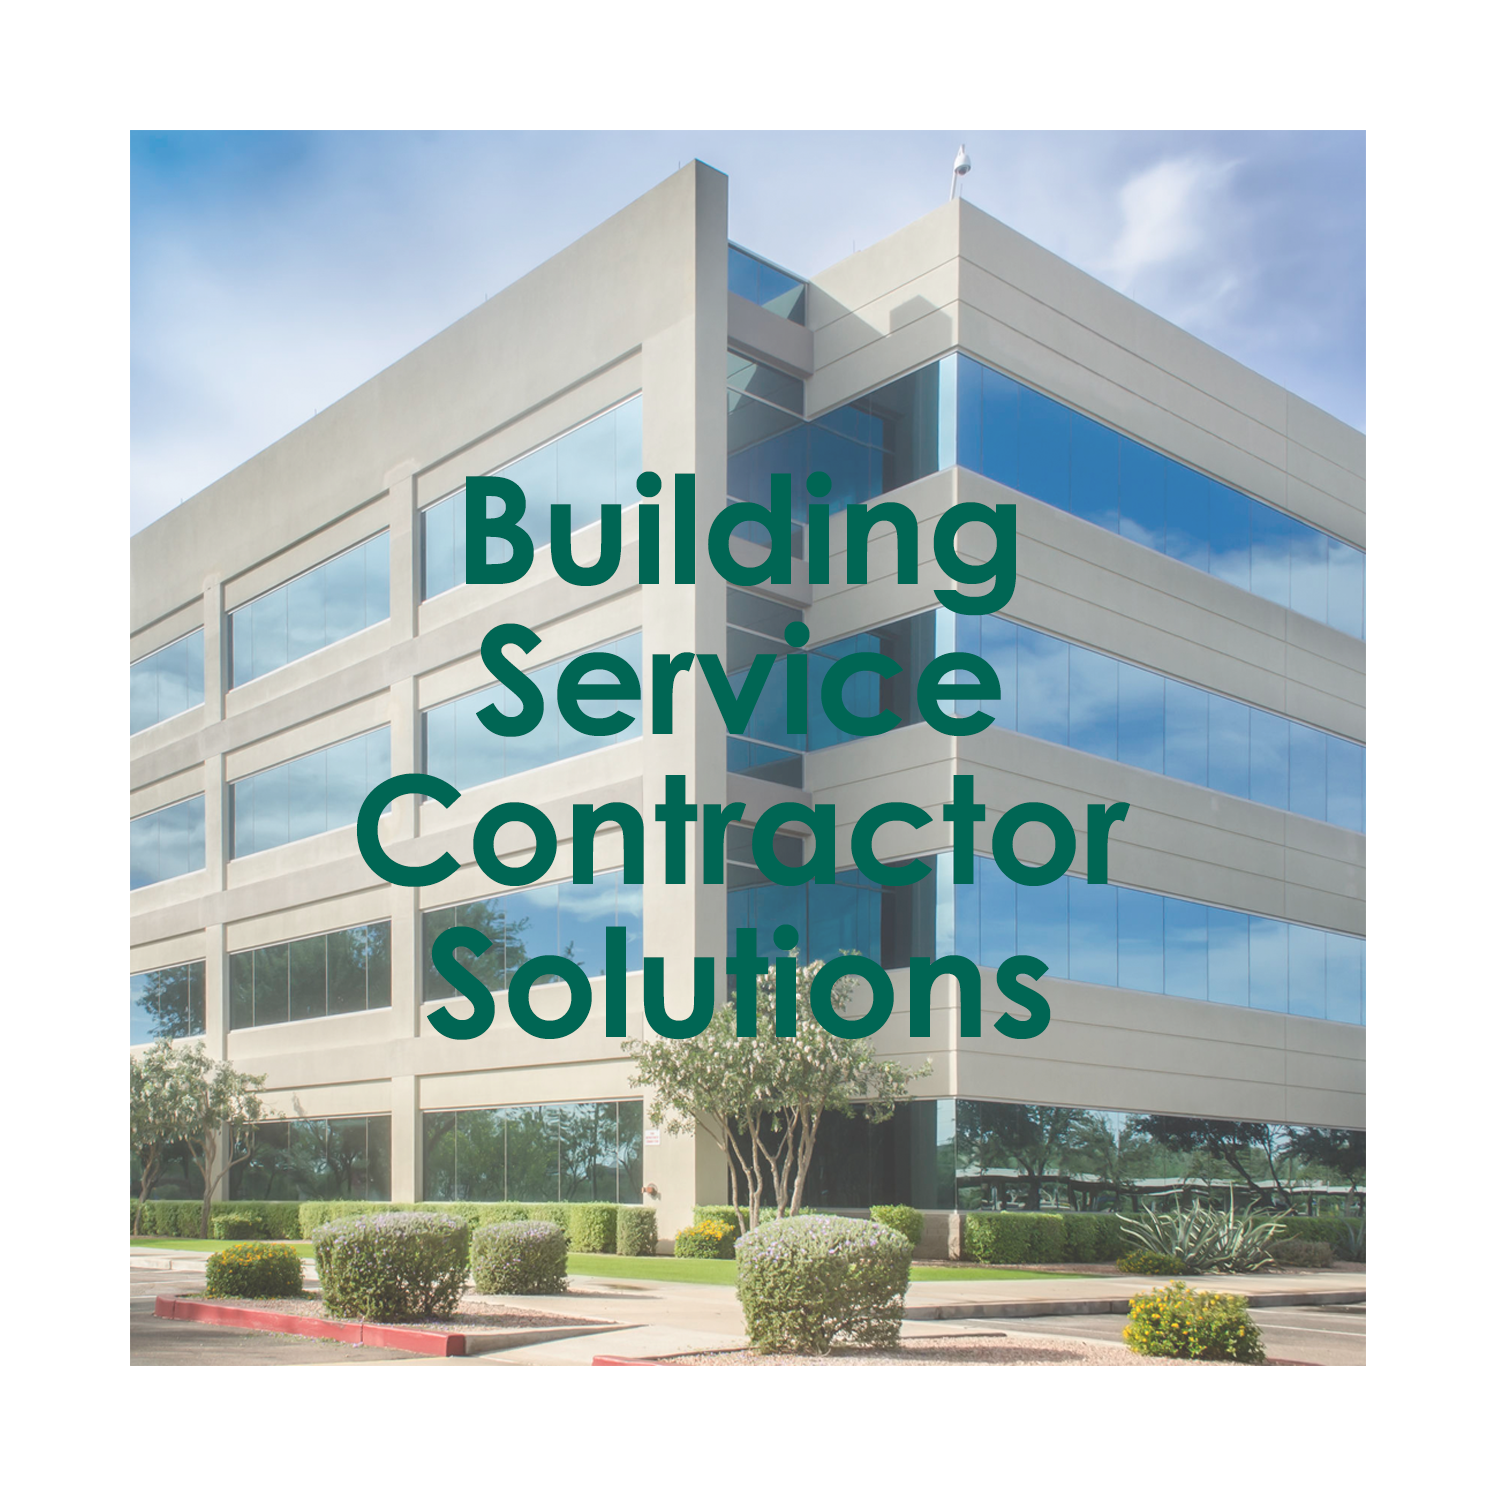 Building Service Contractor Solutions